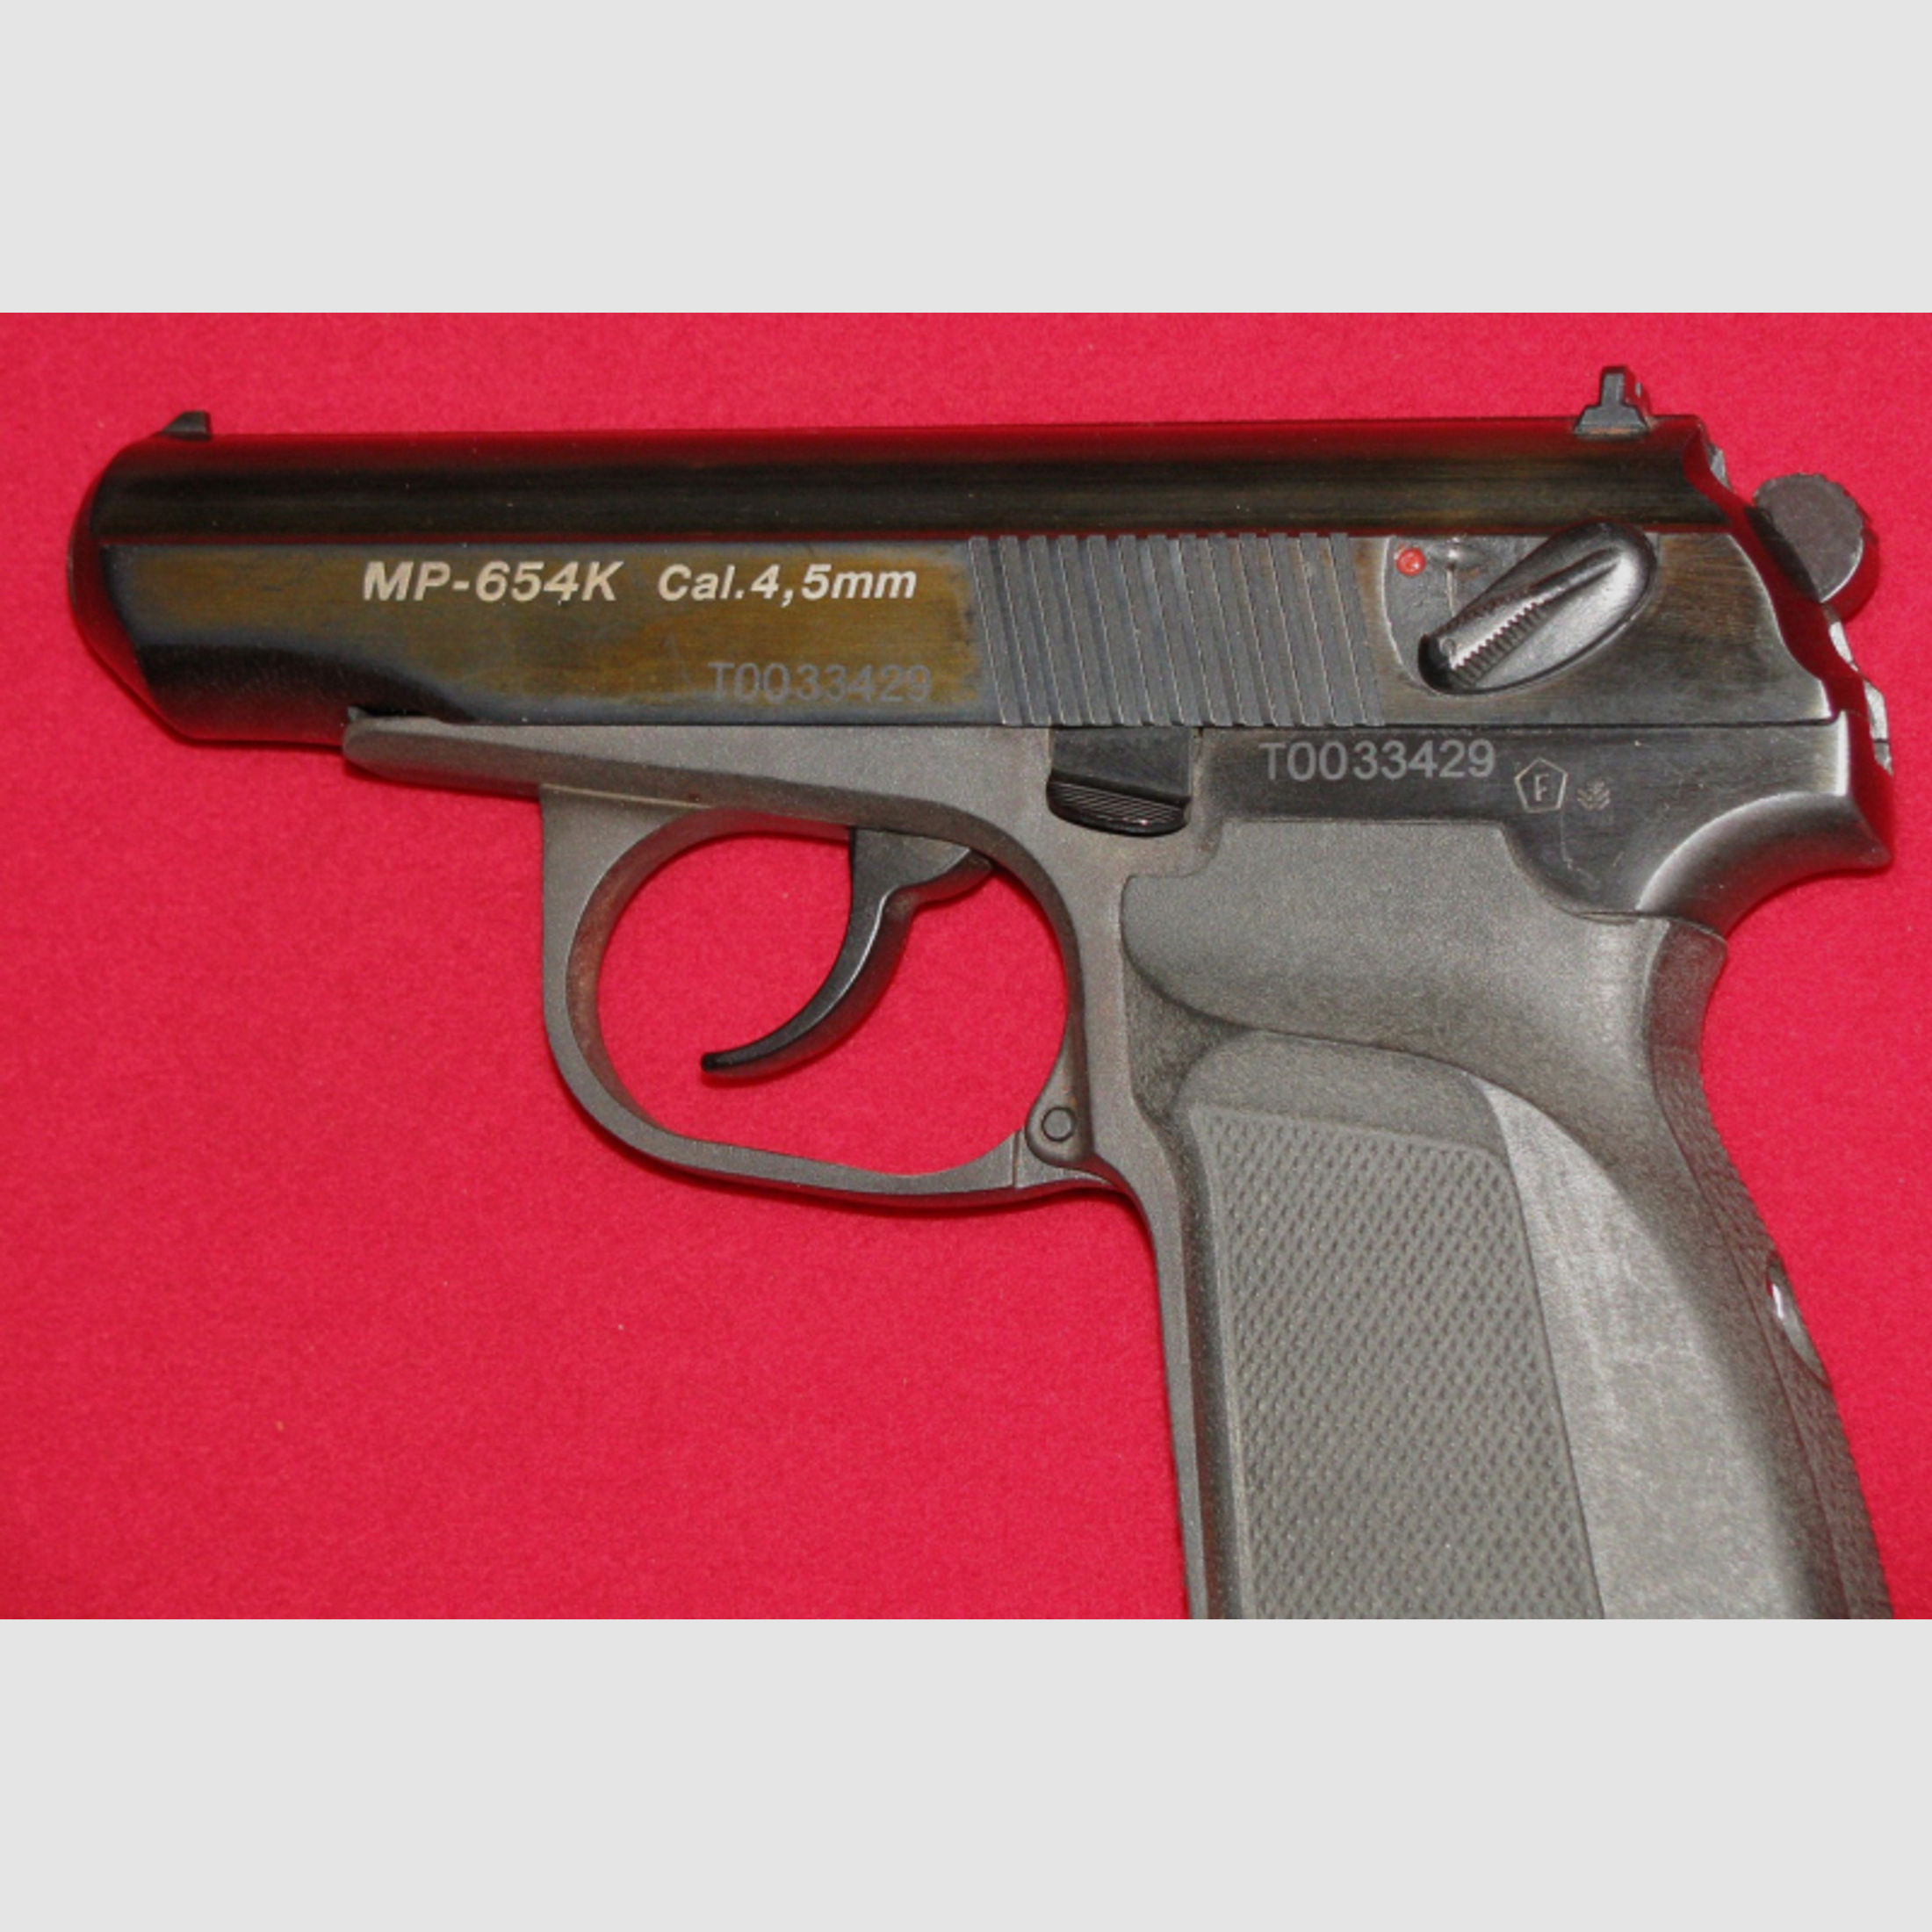 Baikal MP-654K Co2 - Pistole, Cal. 4,5mm Made in Russia, Bitte ansehen